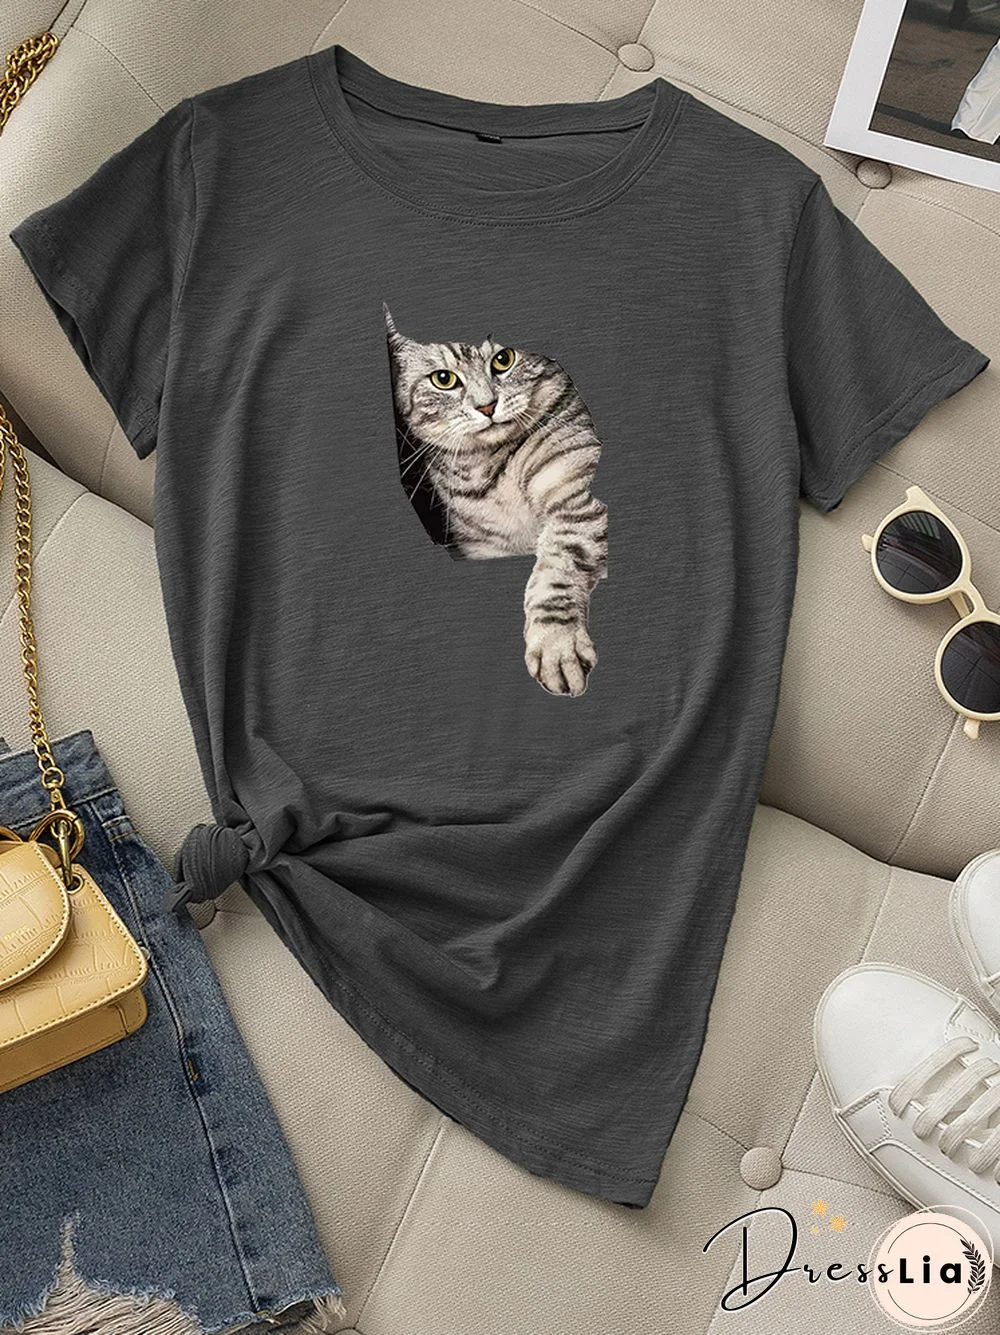 Summer 100% Cotton T-shirt Women Casual Short Sleeve Cat Print Female Graphic Fashion T Shirt Ladies Regular Round Neck Tee Tops